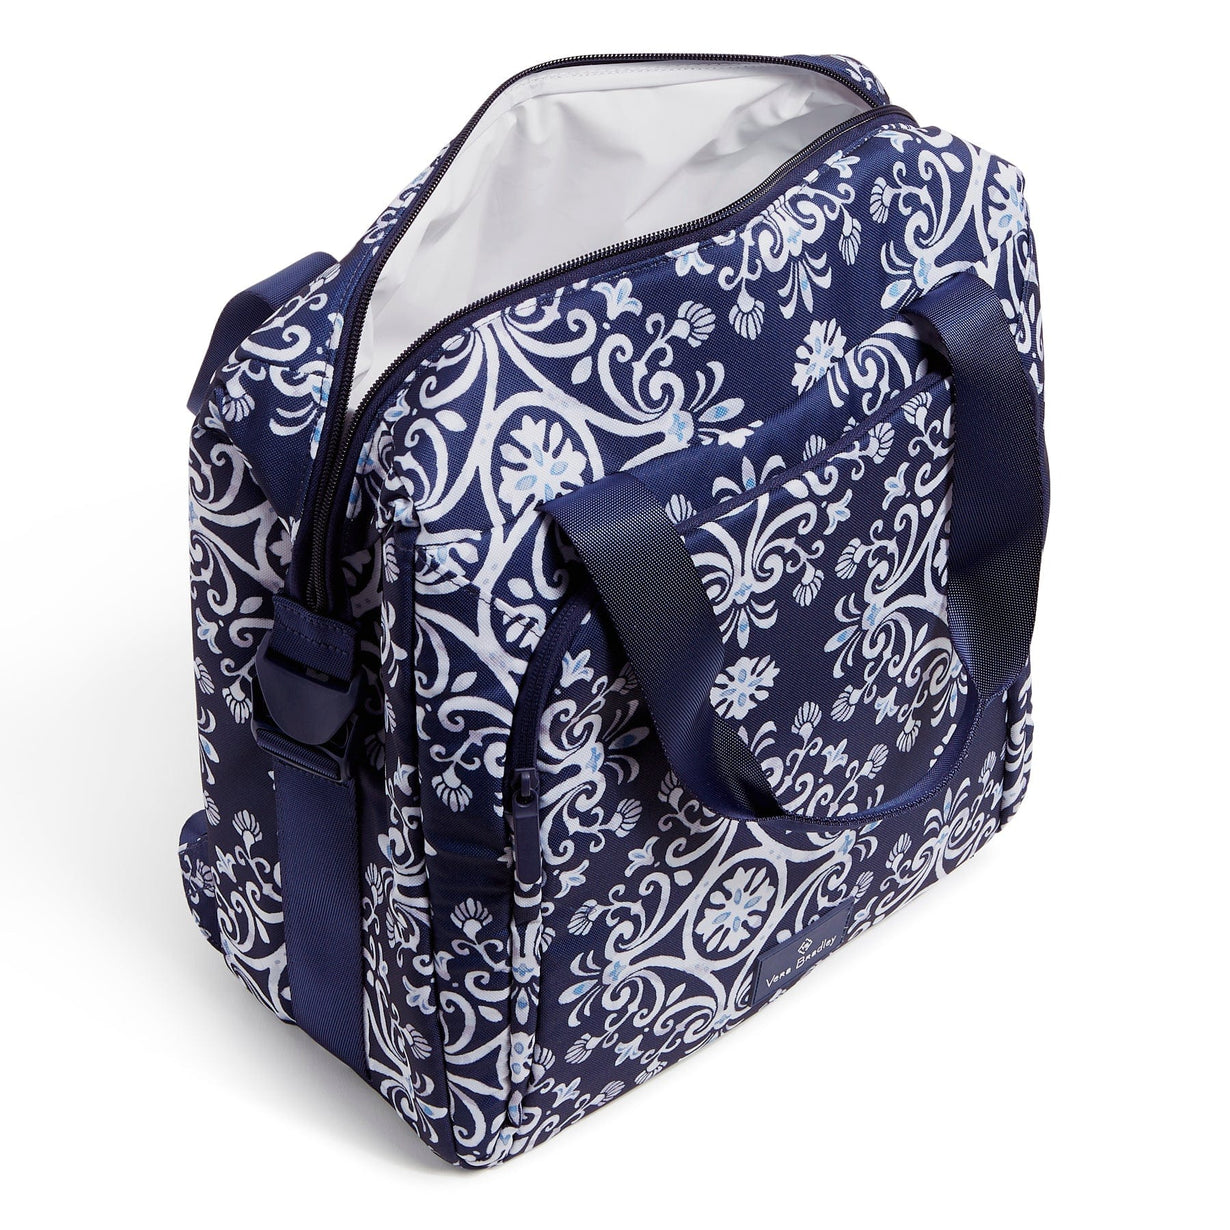 Vera Bradley Diaper Bag/Tote Mid Size Blue Floral 